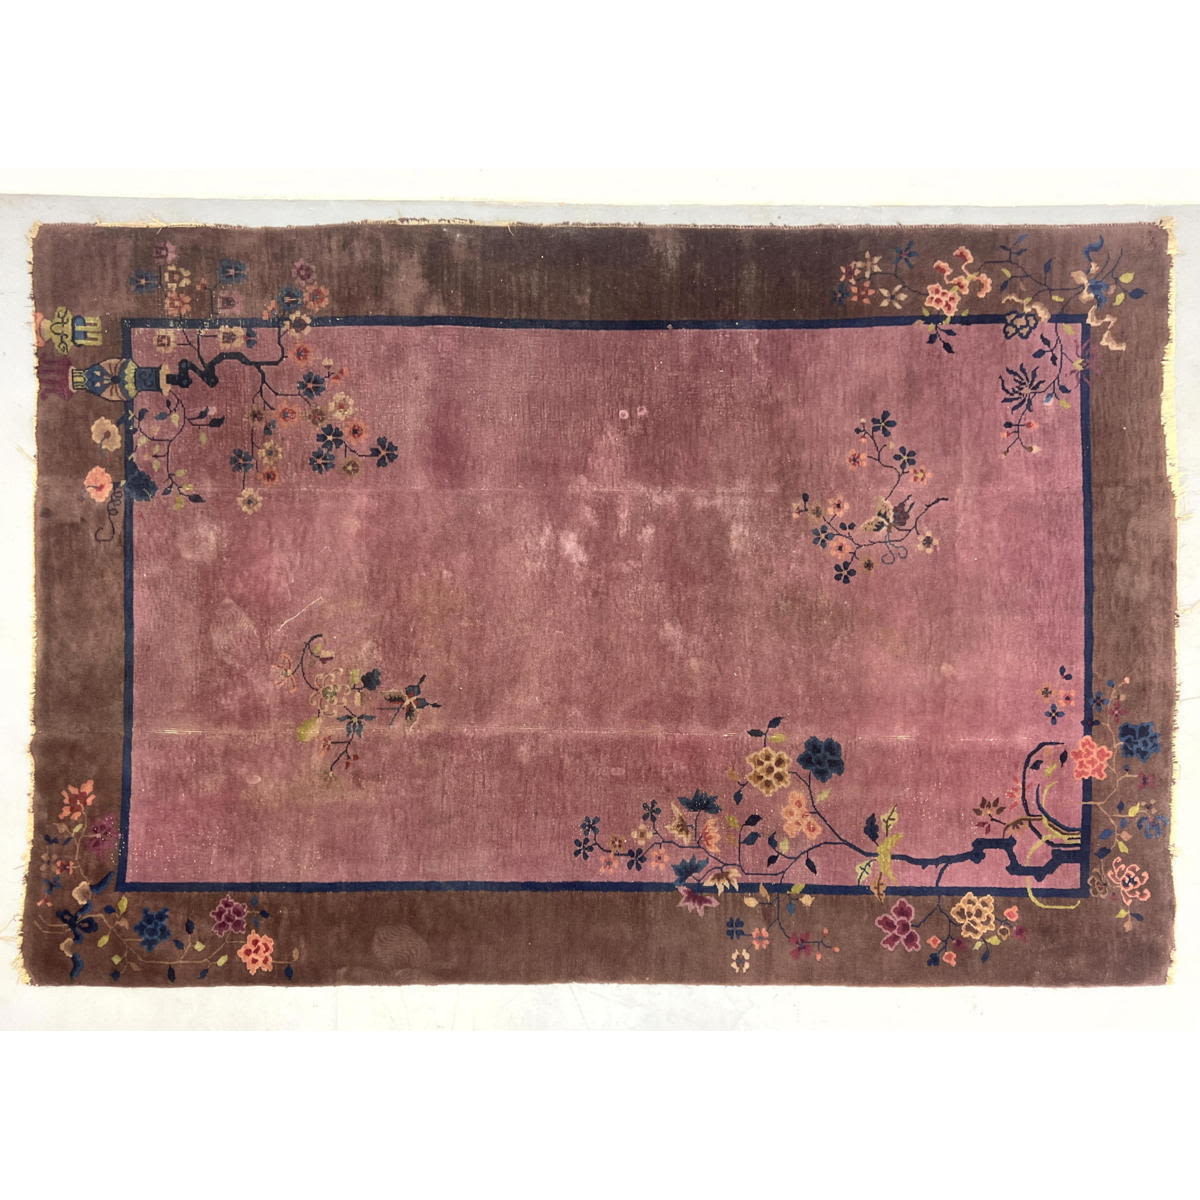 8 7 x 6 Chinese Handmade Carpet 2ff695